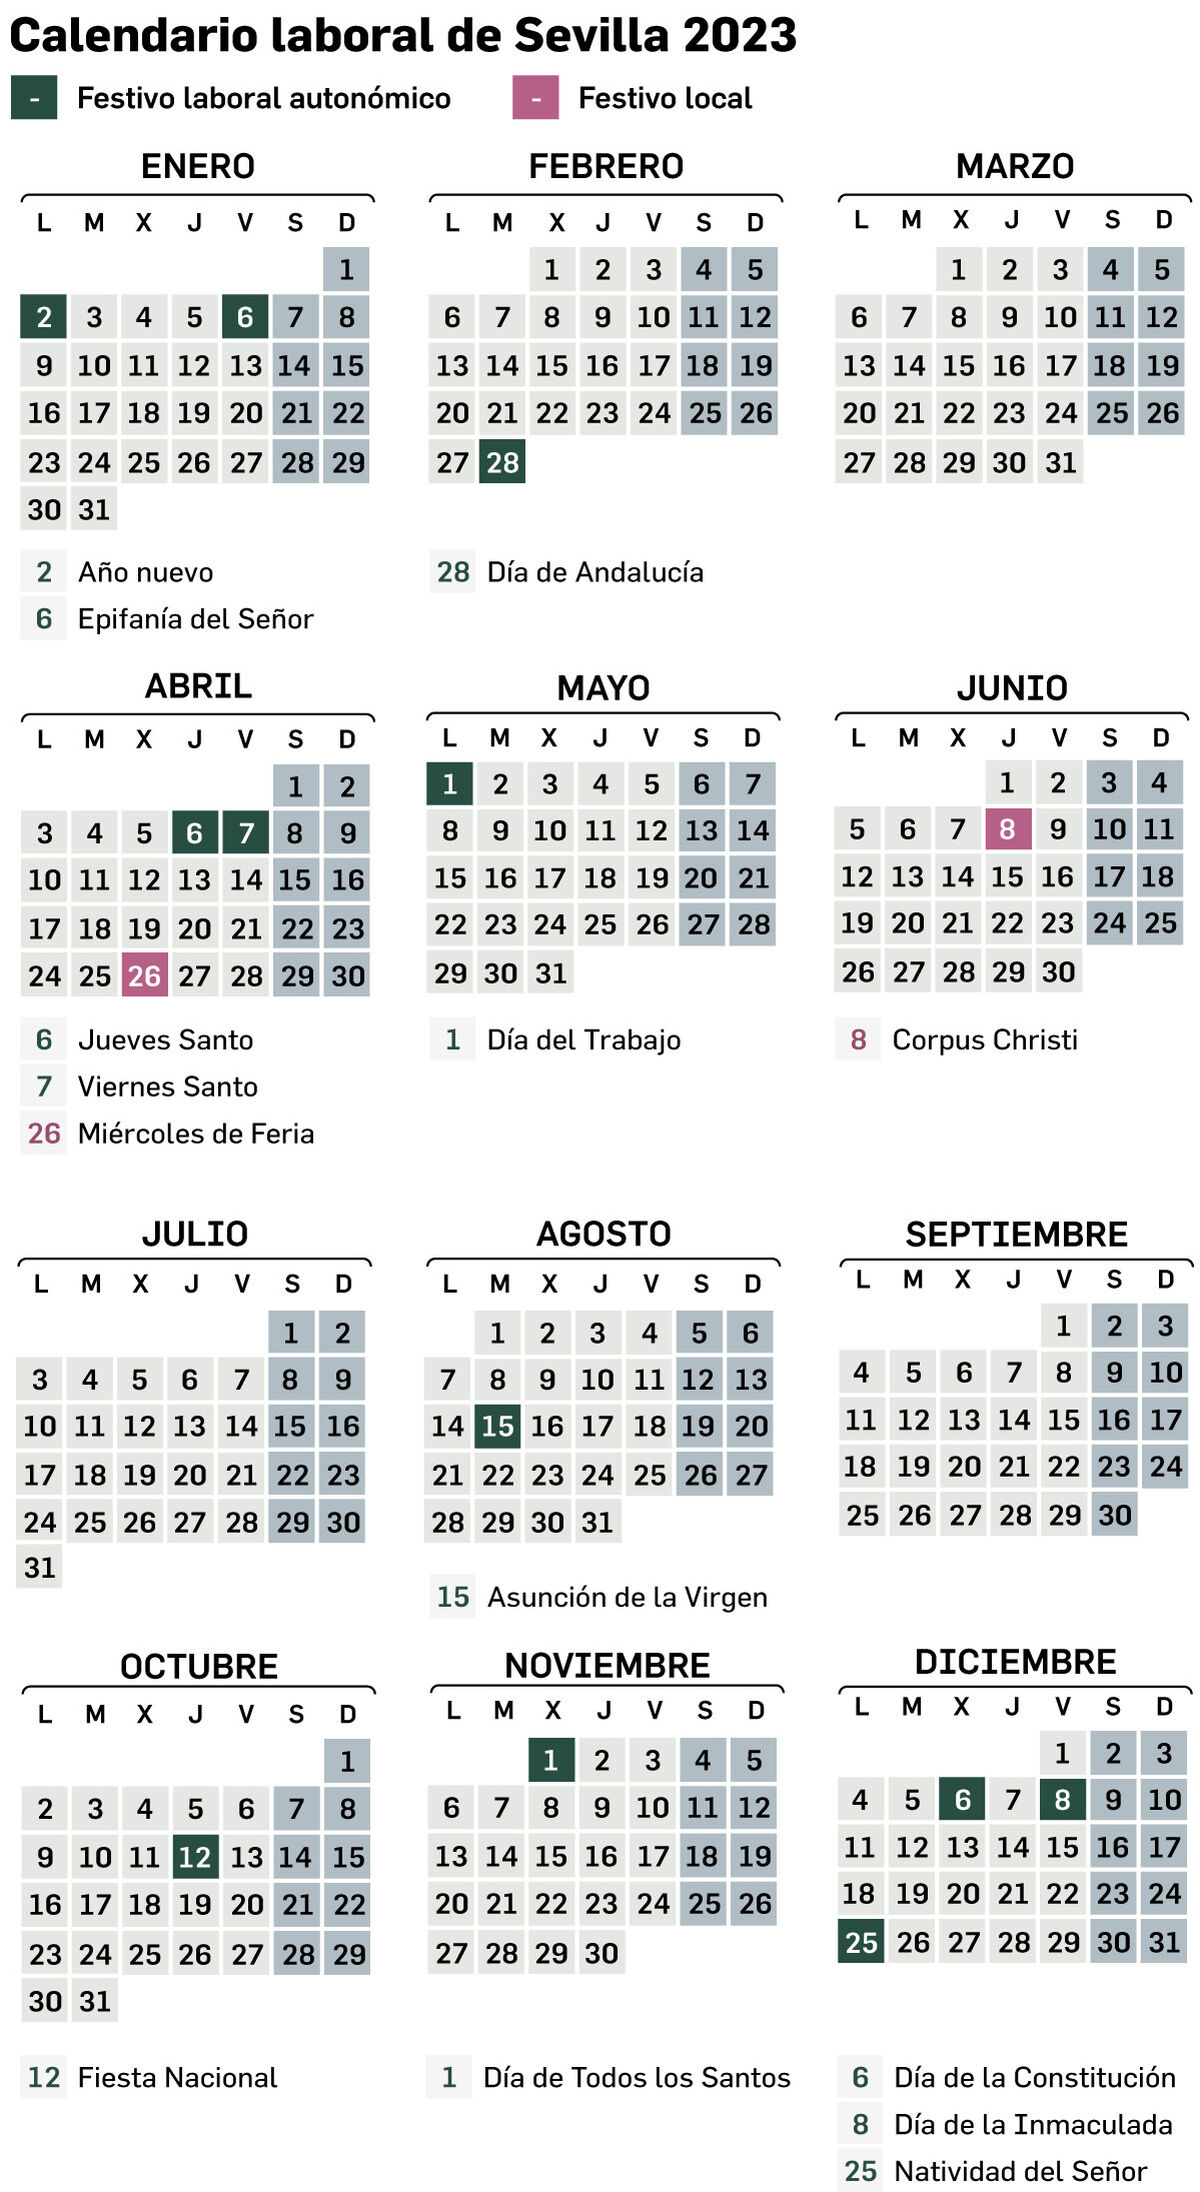 Calendario del sevilla 2023